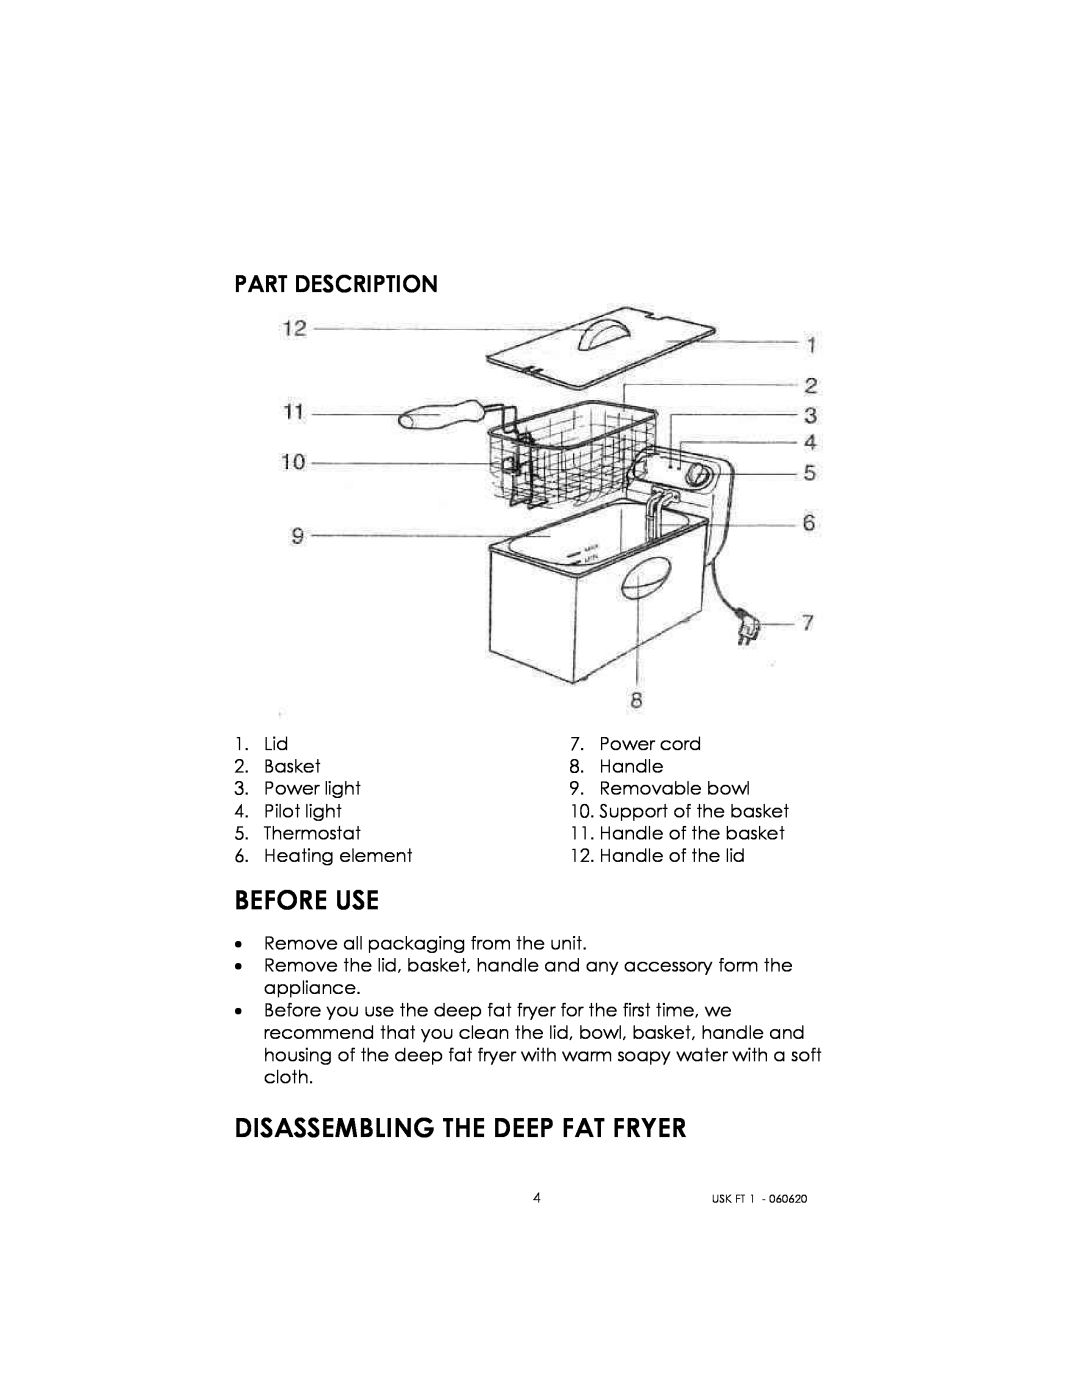 Kalorik USK FT 1 manual Before Use, Disassembling The Deep Fat Fryer, Part Description 